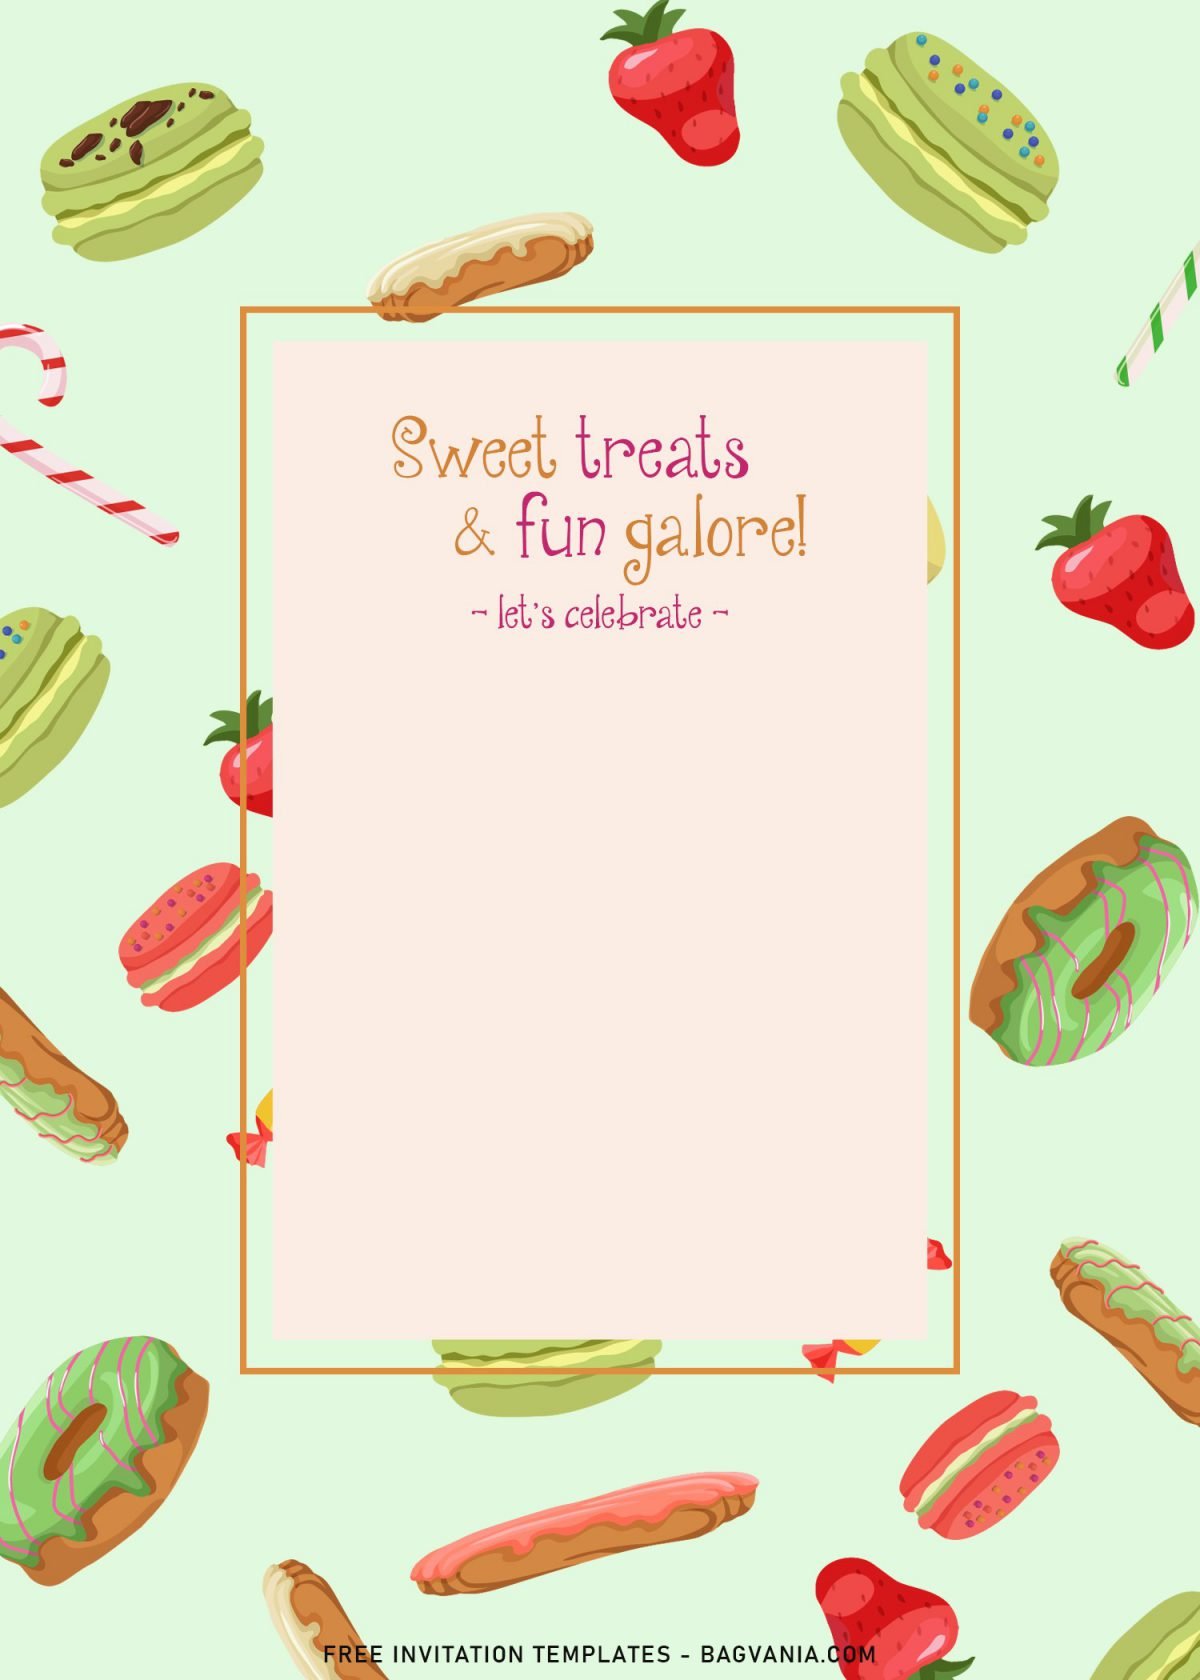 11+ Sweet Treats Fun Galore Birthday Invitation Templates and has rustic background